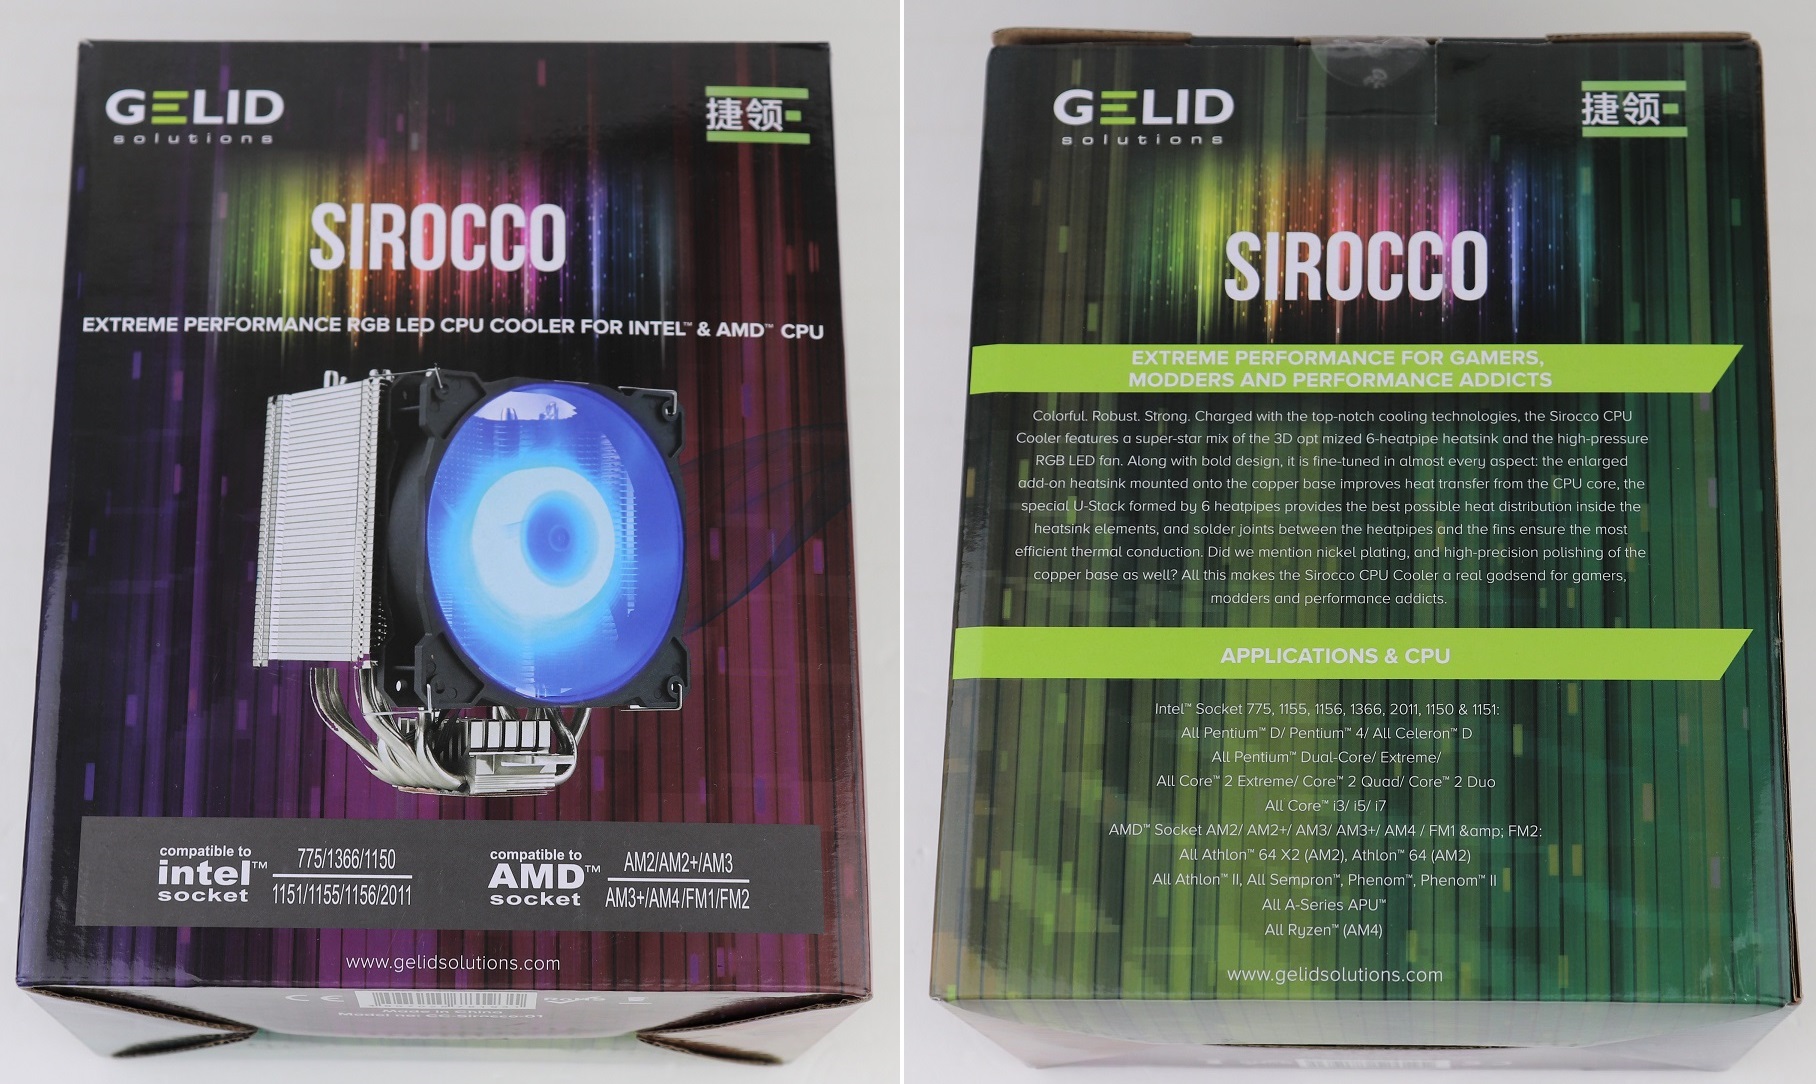 GELID Sirocco CPU Cooler